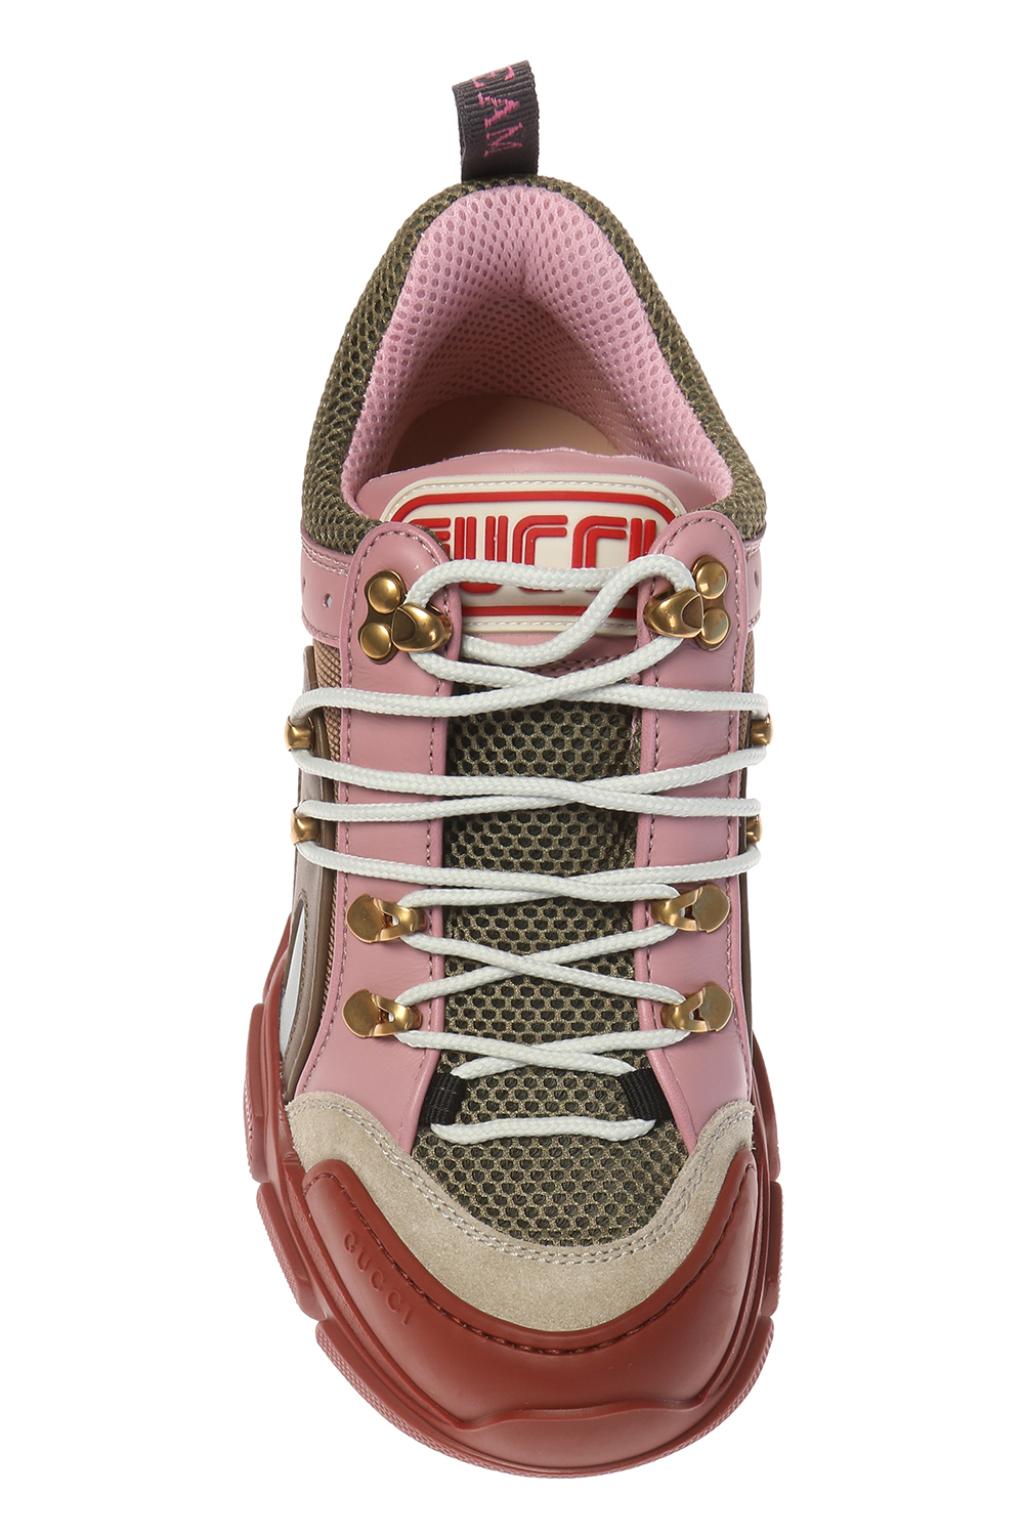 flashtrek gucci sneakers